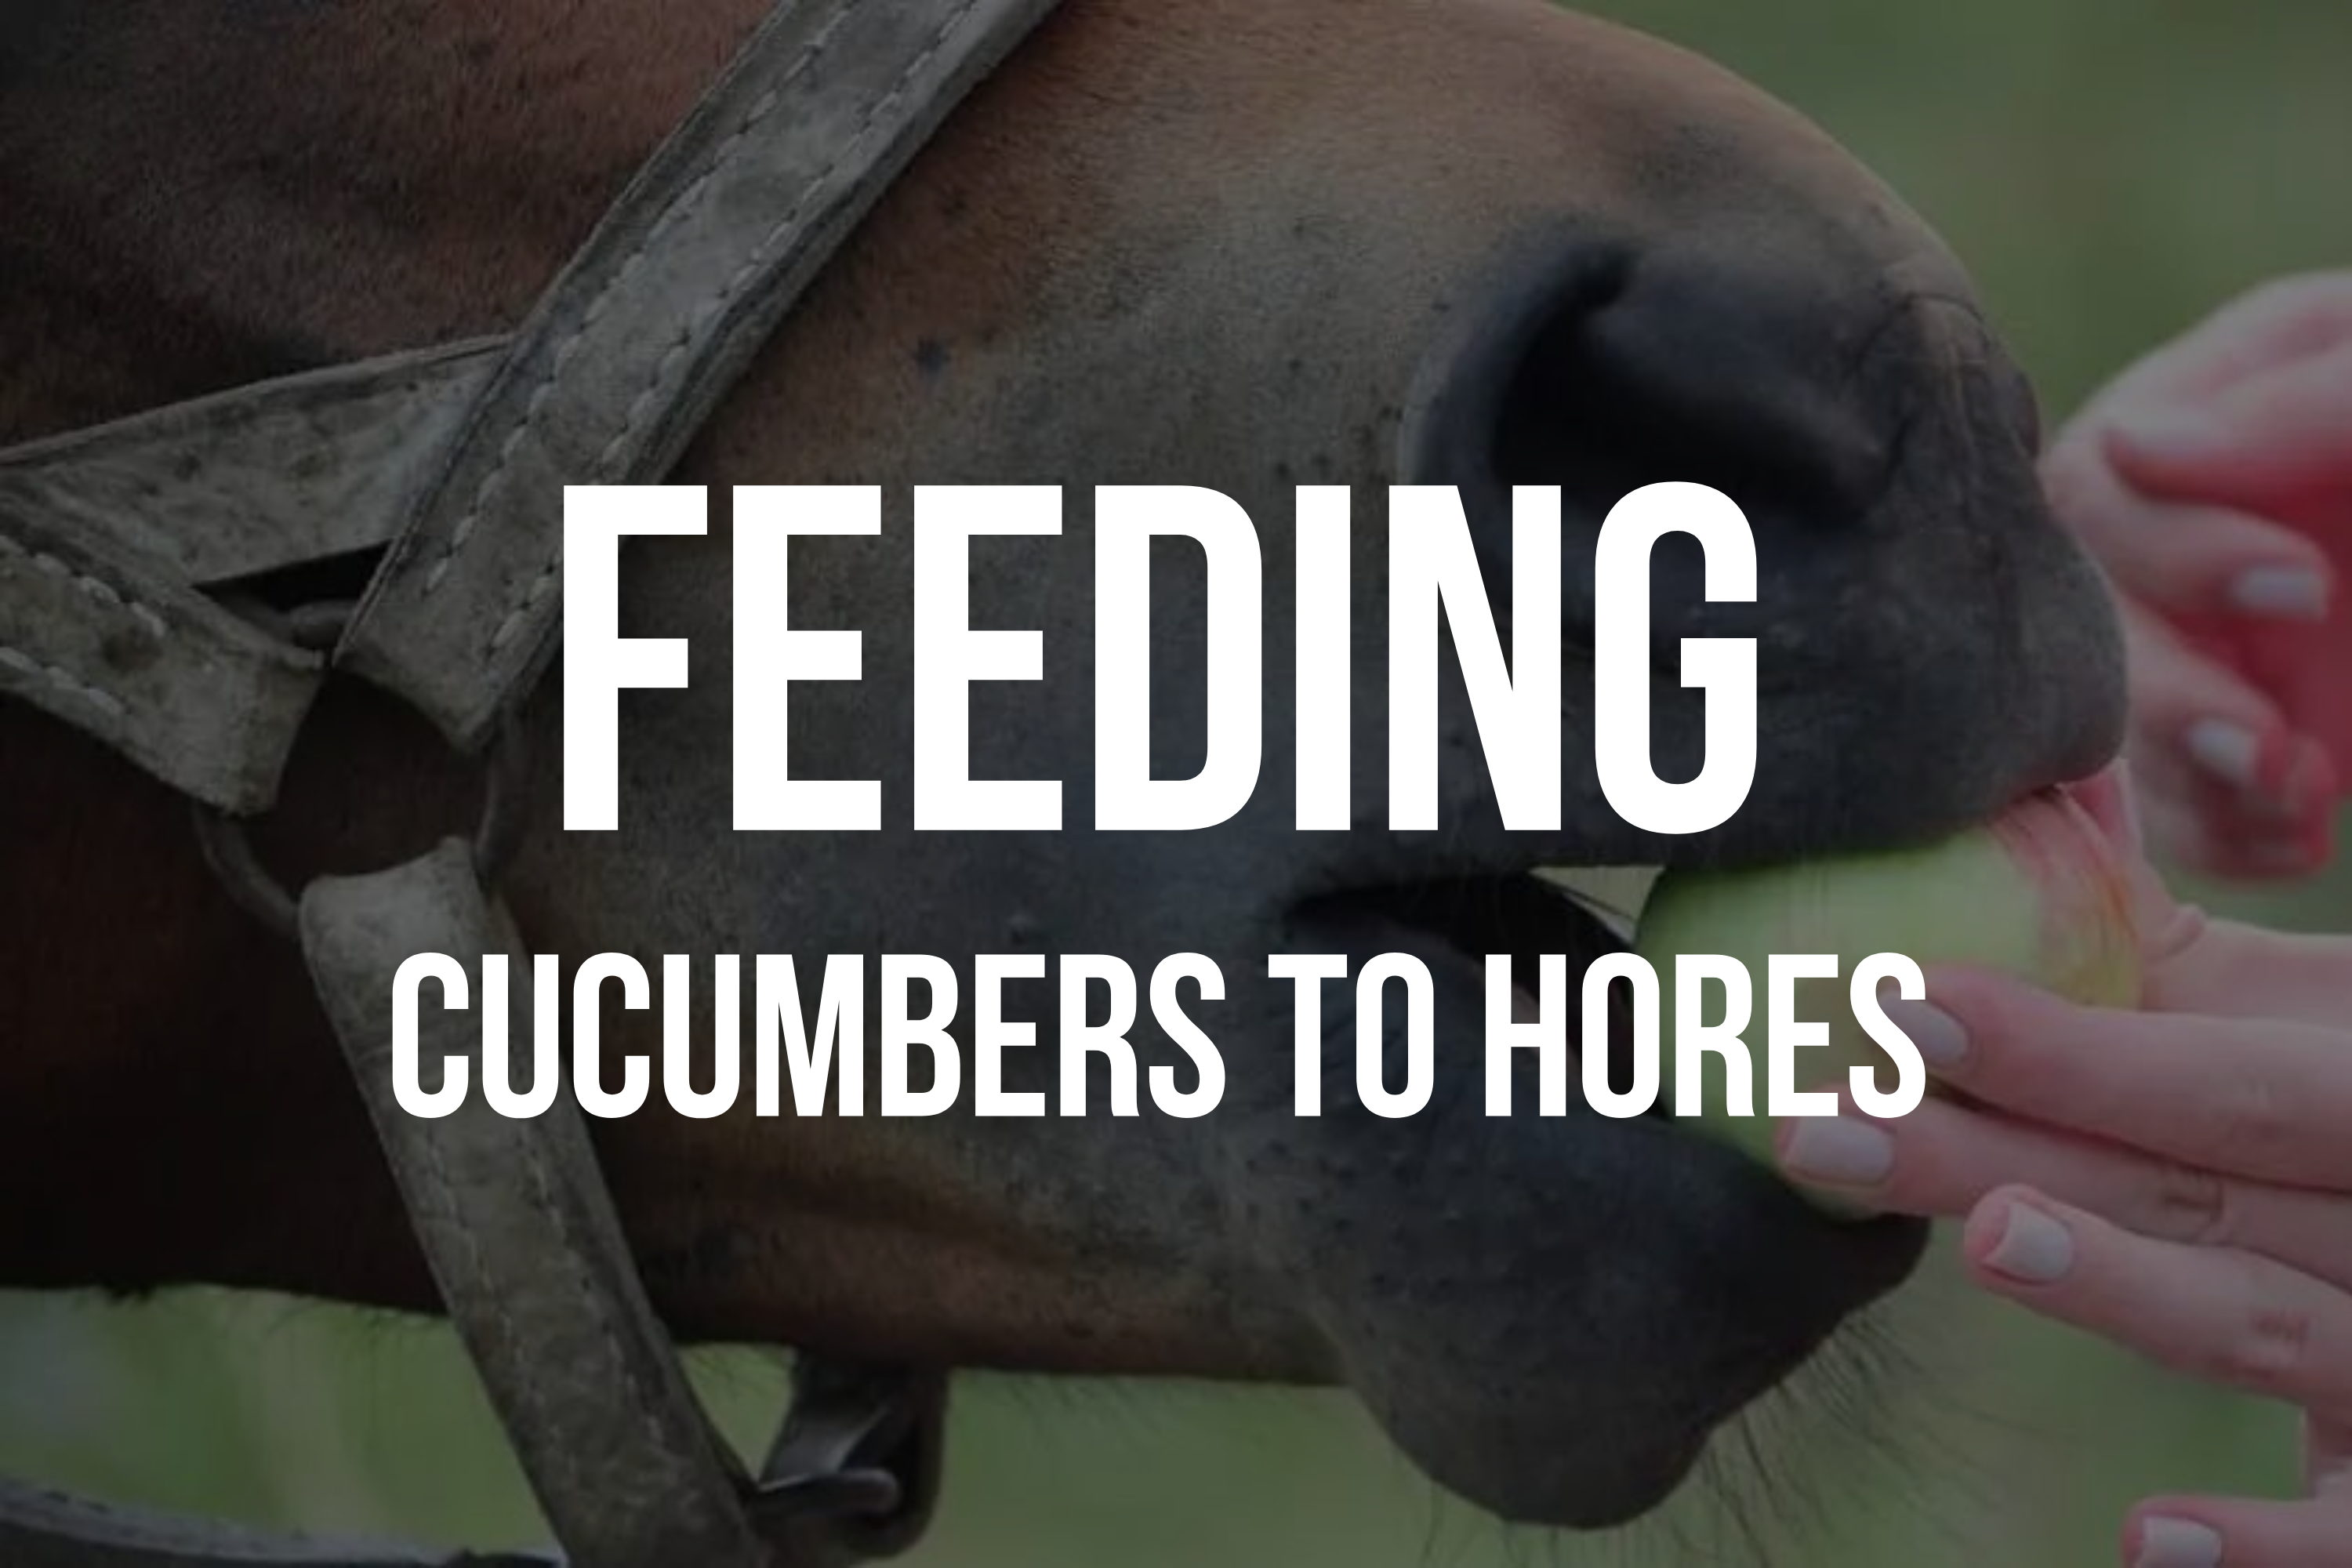 Can Horses Eat Cucumbers